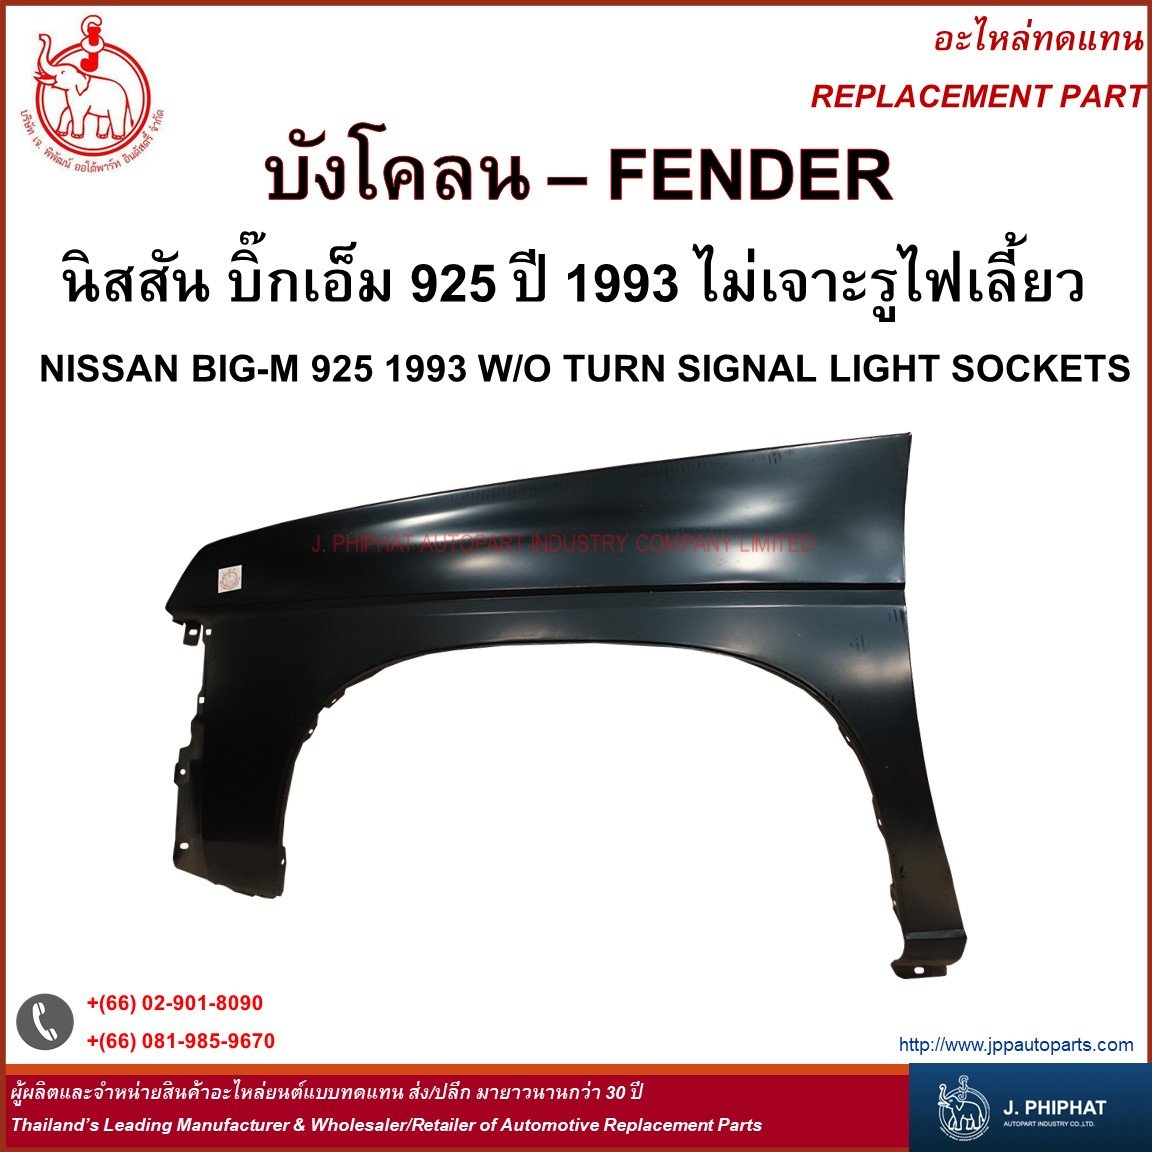 Fender - Nissan Big-M 925 1993 W/O turn signal light sockets